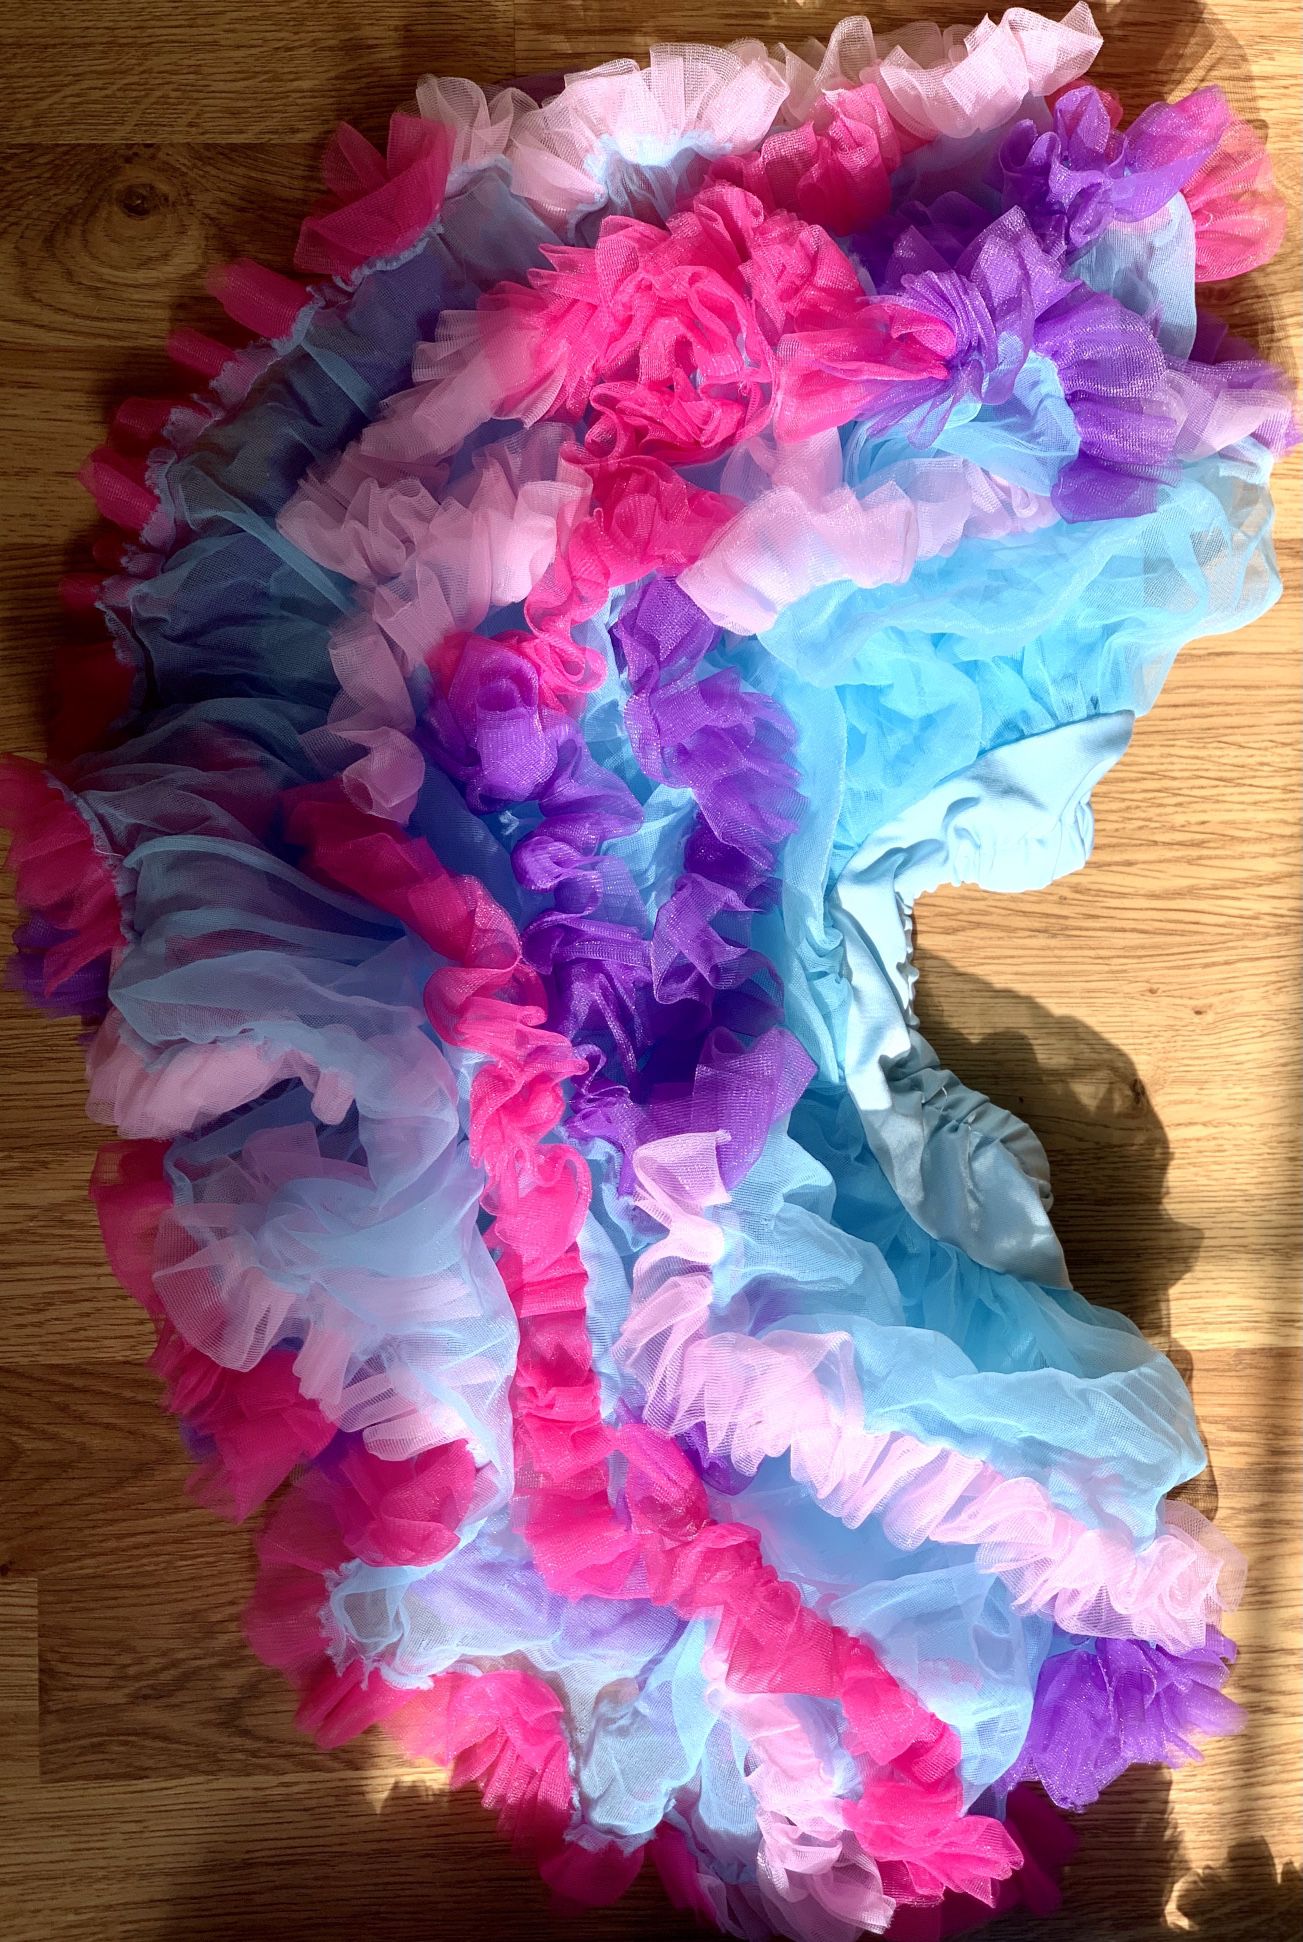 Extra Fluffy Tutu Skirts, Leotard, & Sequin Skirt from Dillard’s